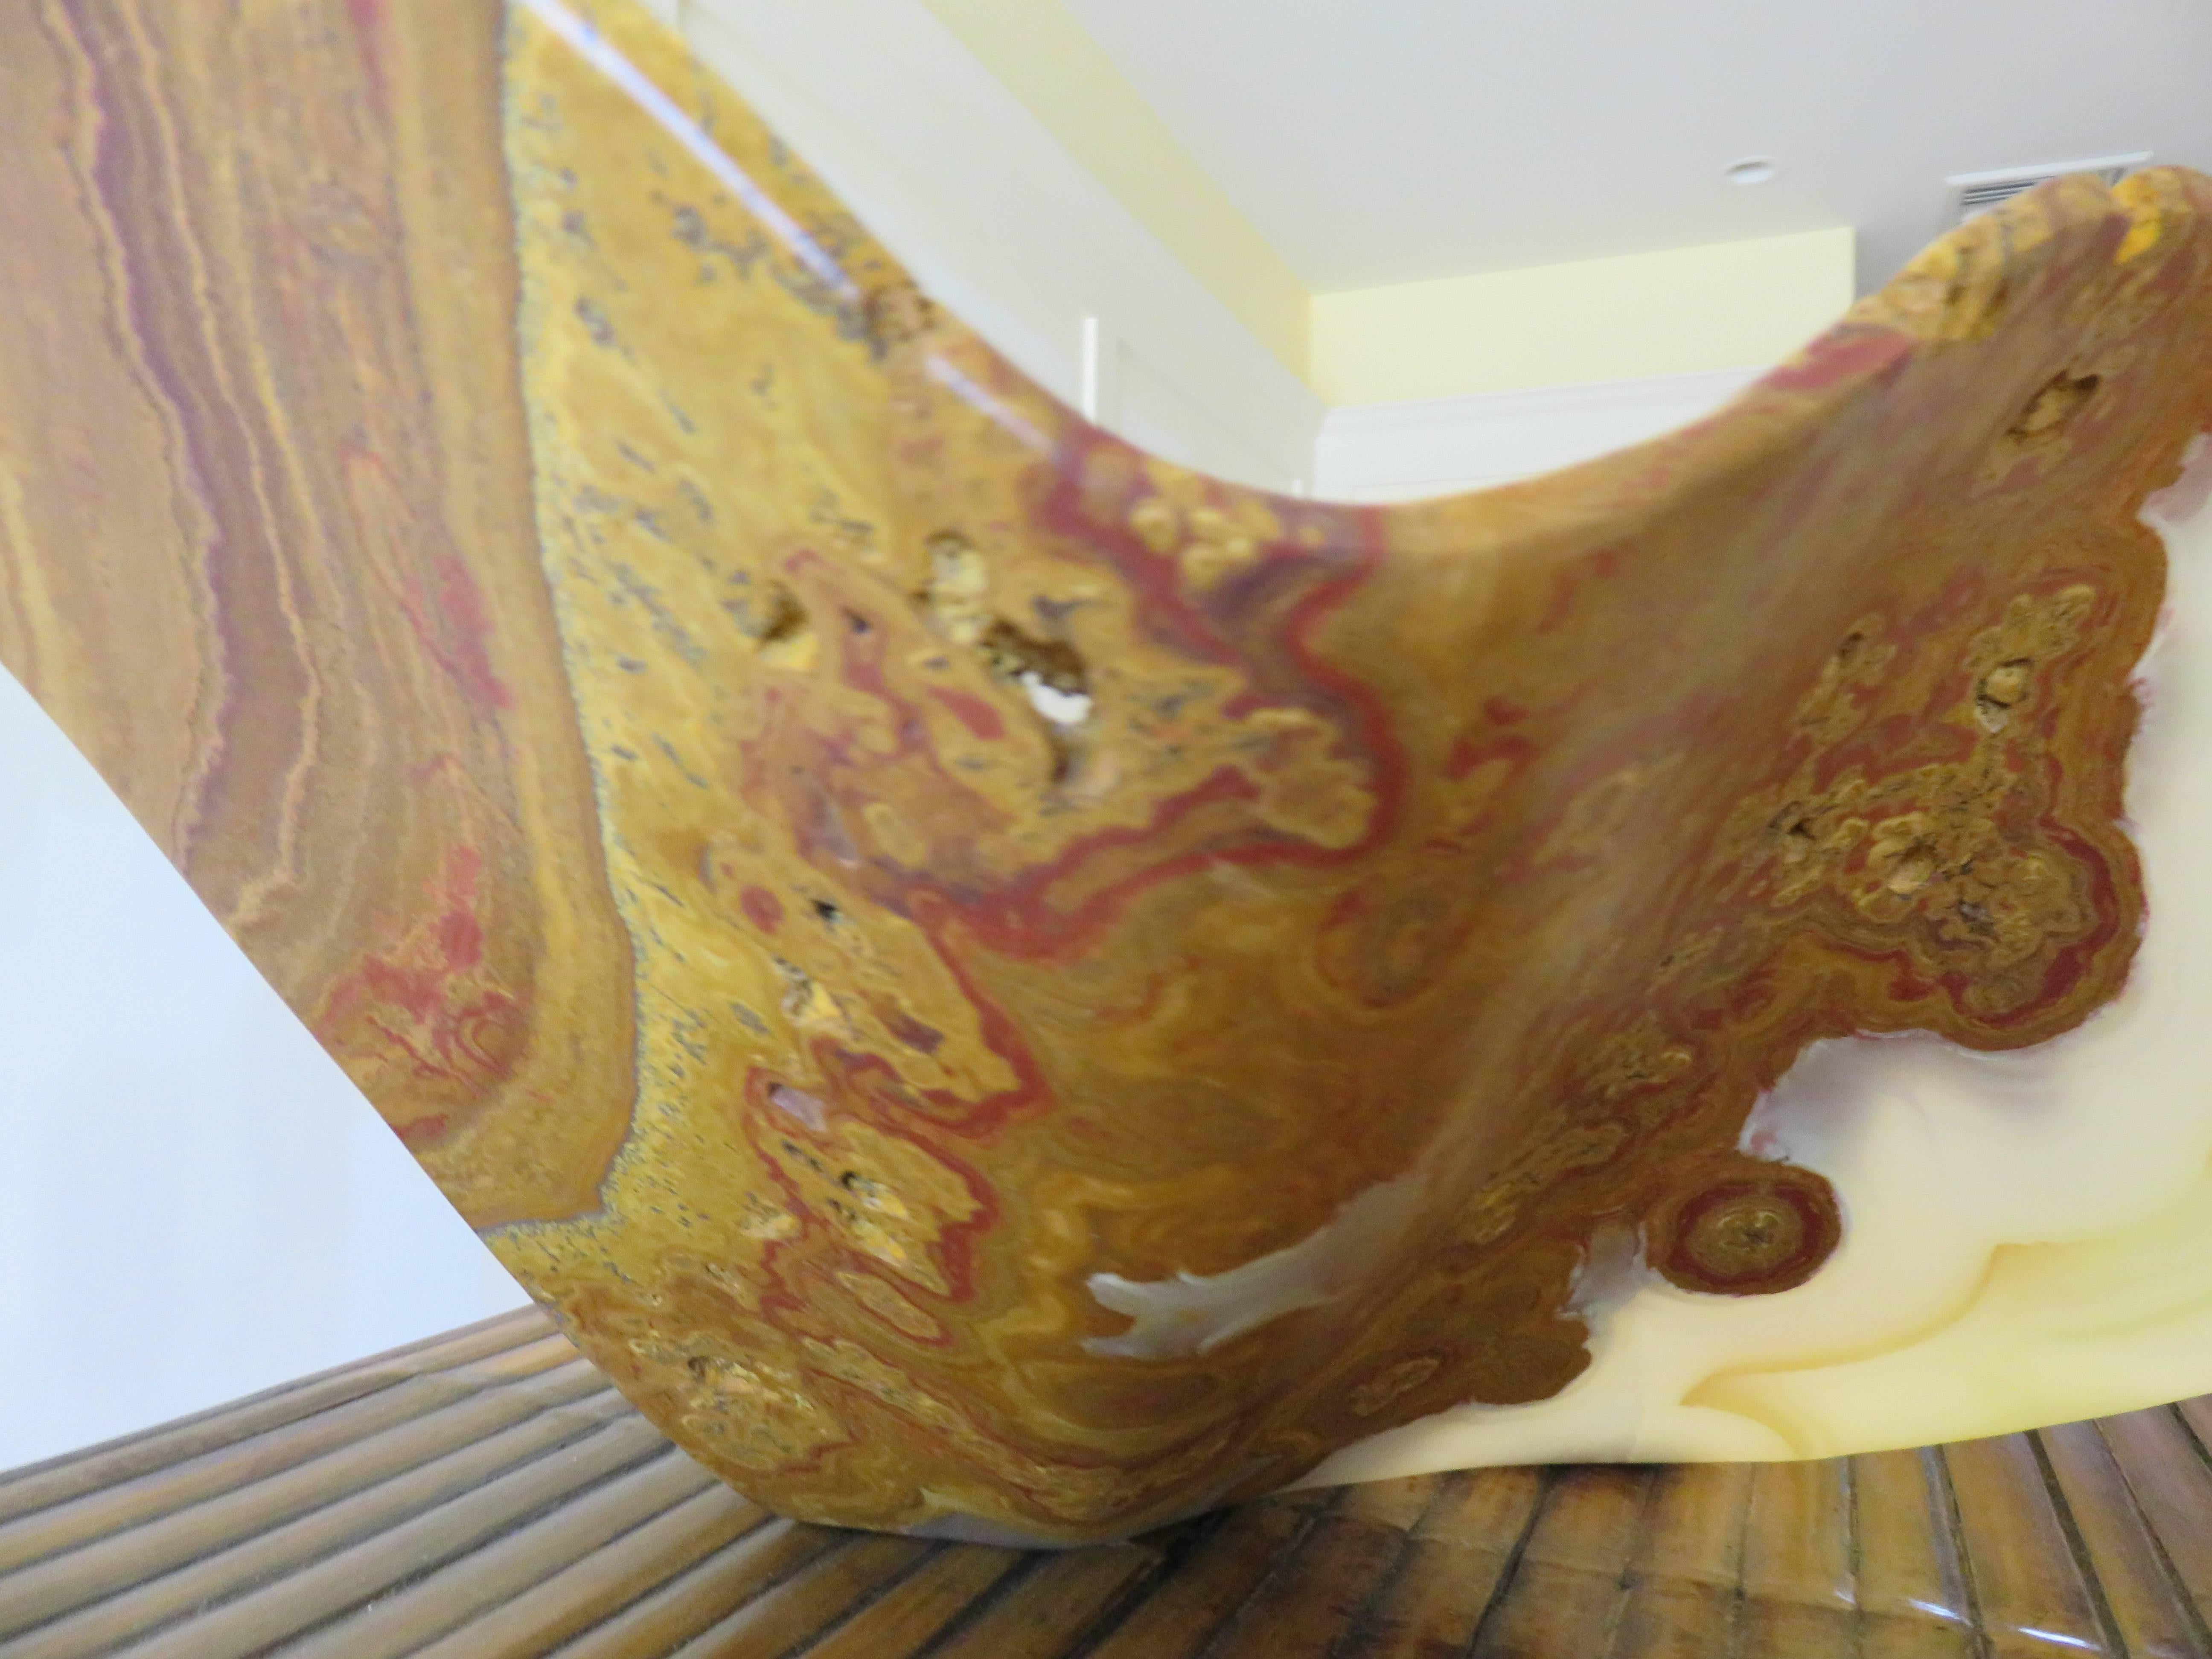 20th Century Massive Sculptural Shell Form Onyx Bowl/Vessel